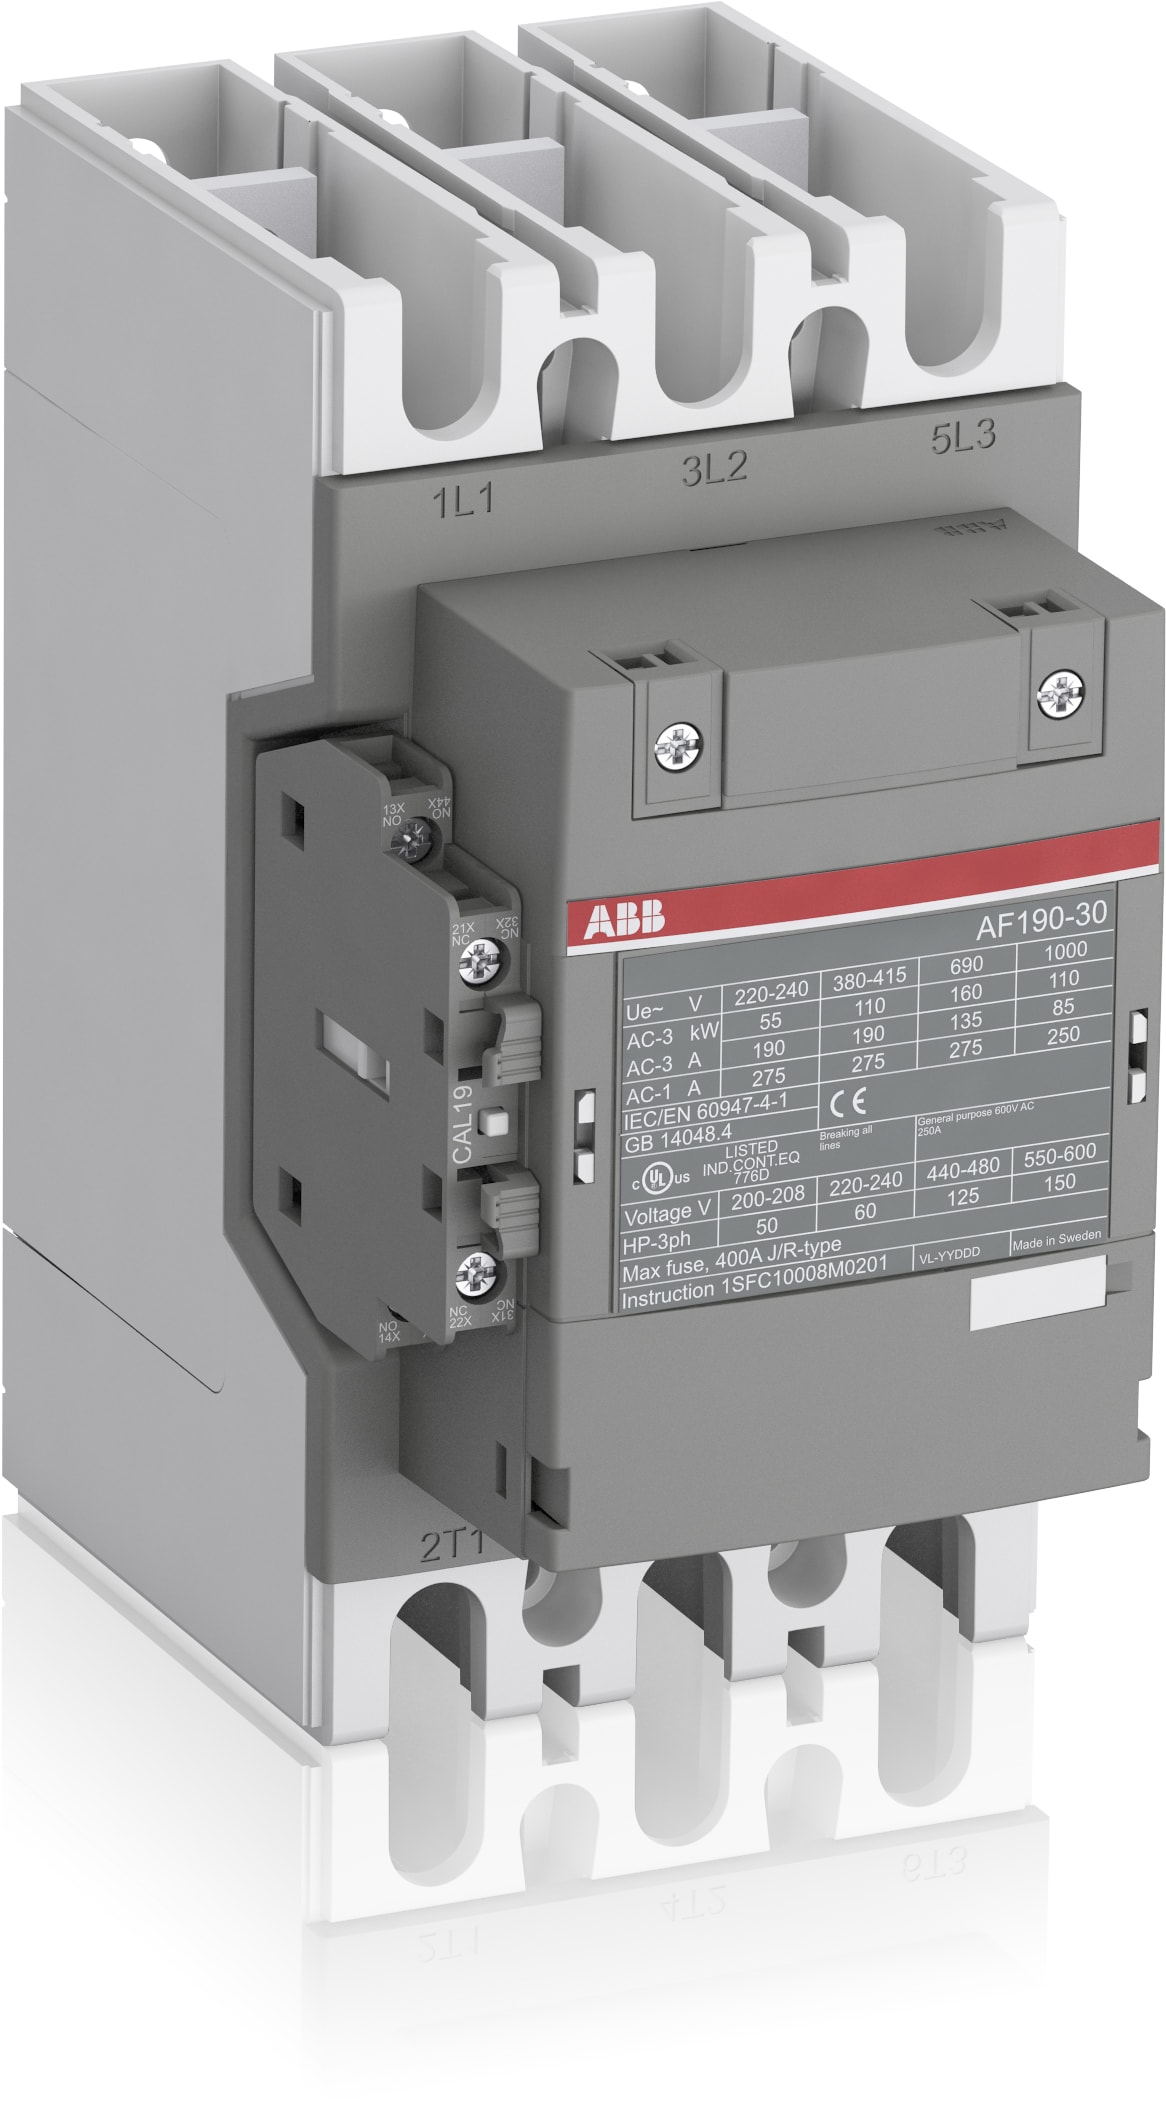 ABB Electrification - AF190-30-11-13 100-250V 50/60Hz/DC - Kontaktor med skinnetilkobling. Med 1NO+1NC hjelpekontakt.